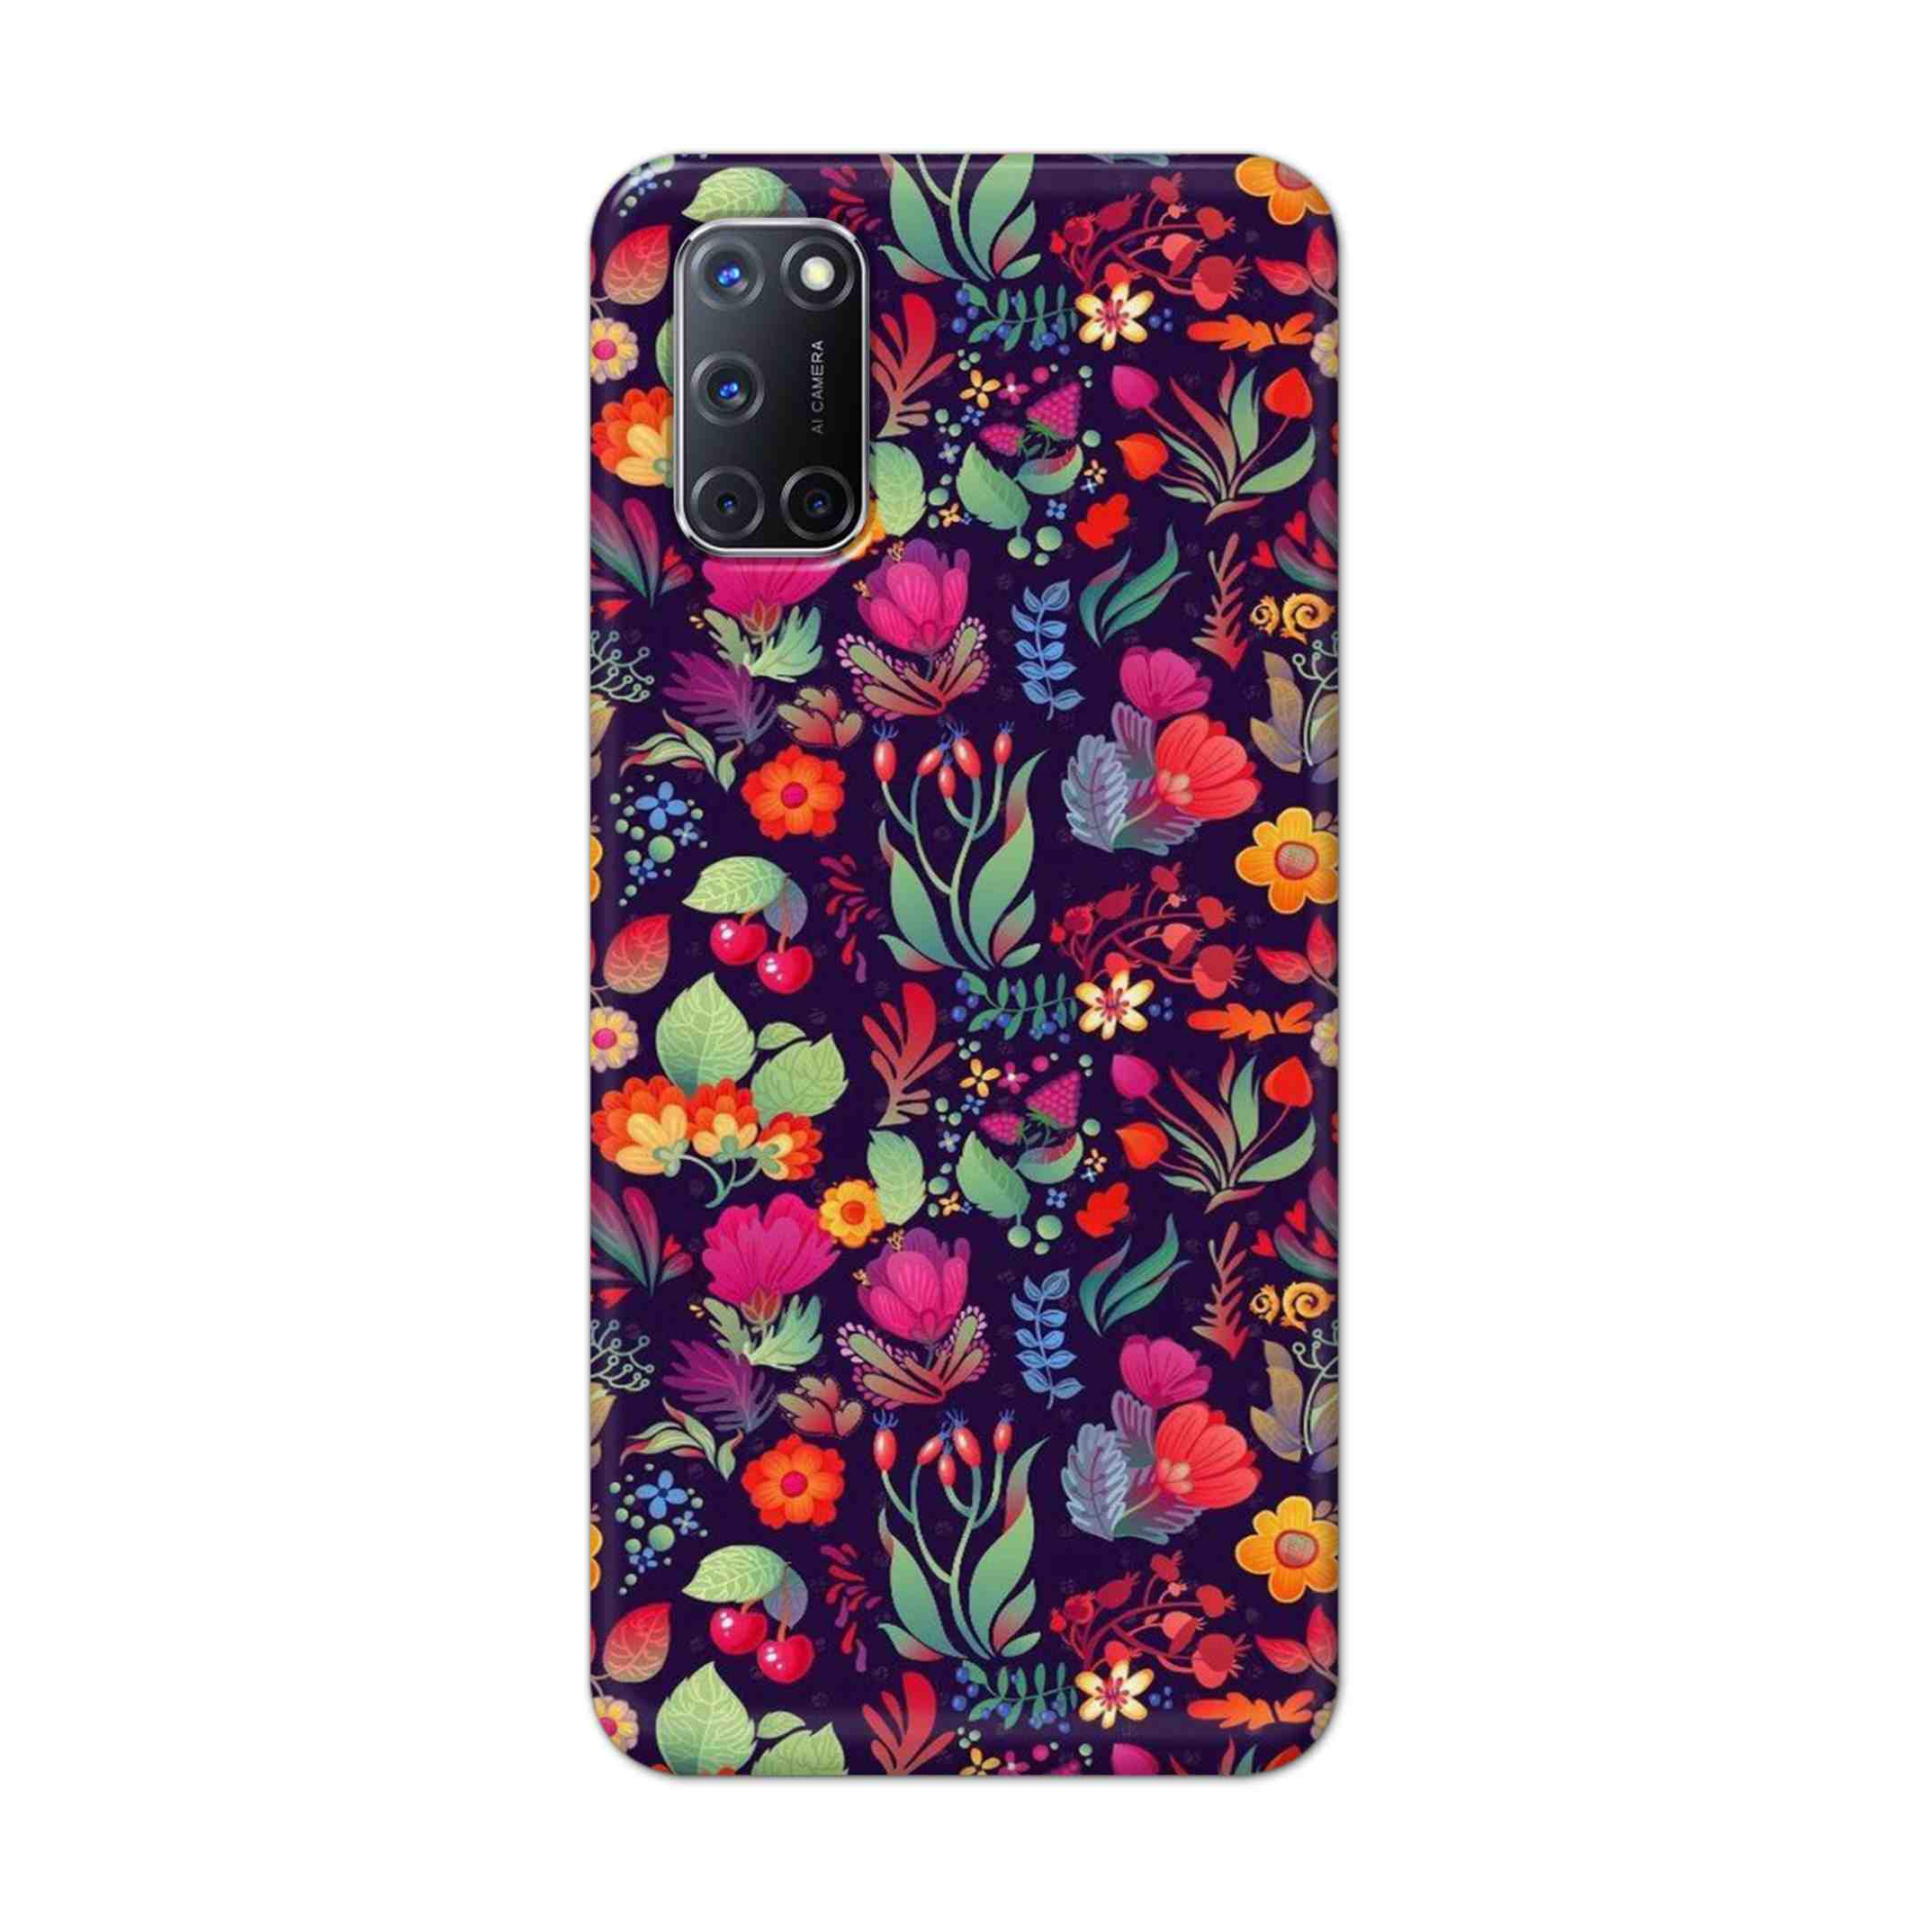 Buy Fruits Flower Hard Back Mobile Phone Case Cover For Oppo A52 Online